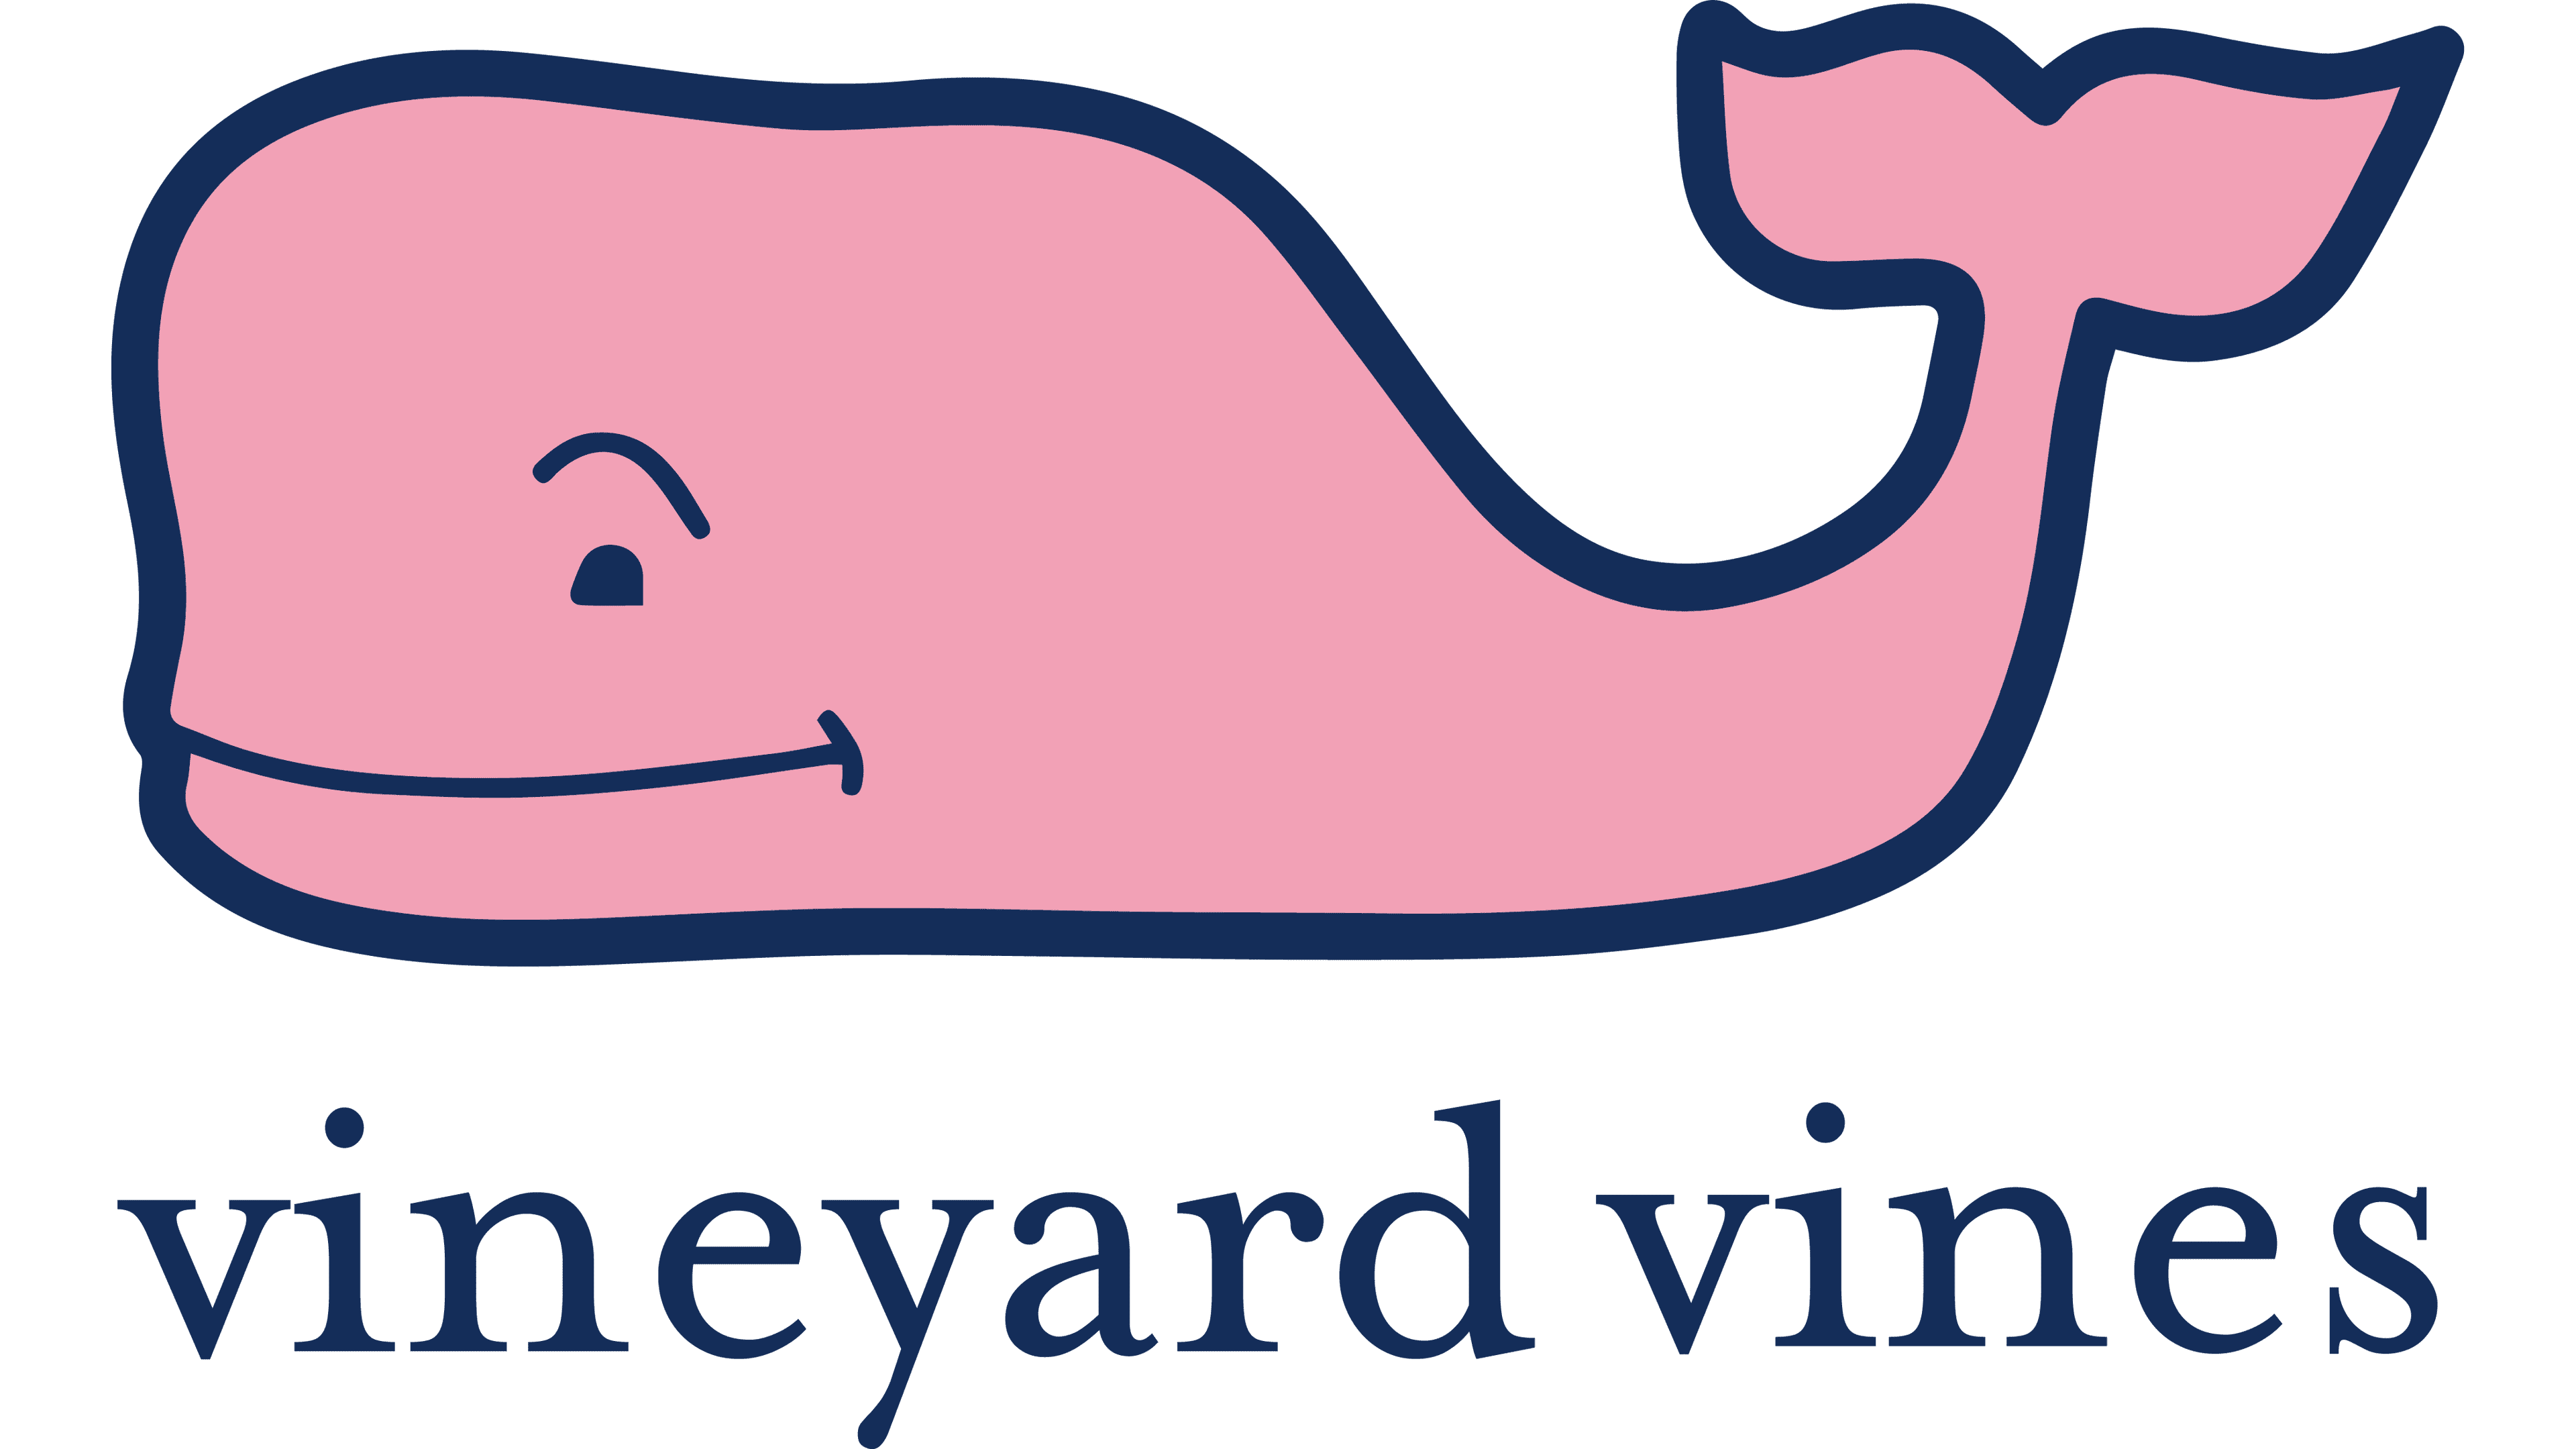 Vineyard vines  Vineyard vines logo, Vineyard vines stickers